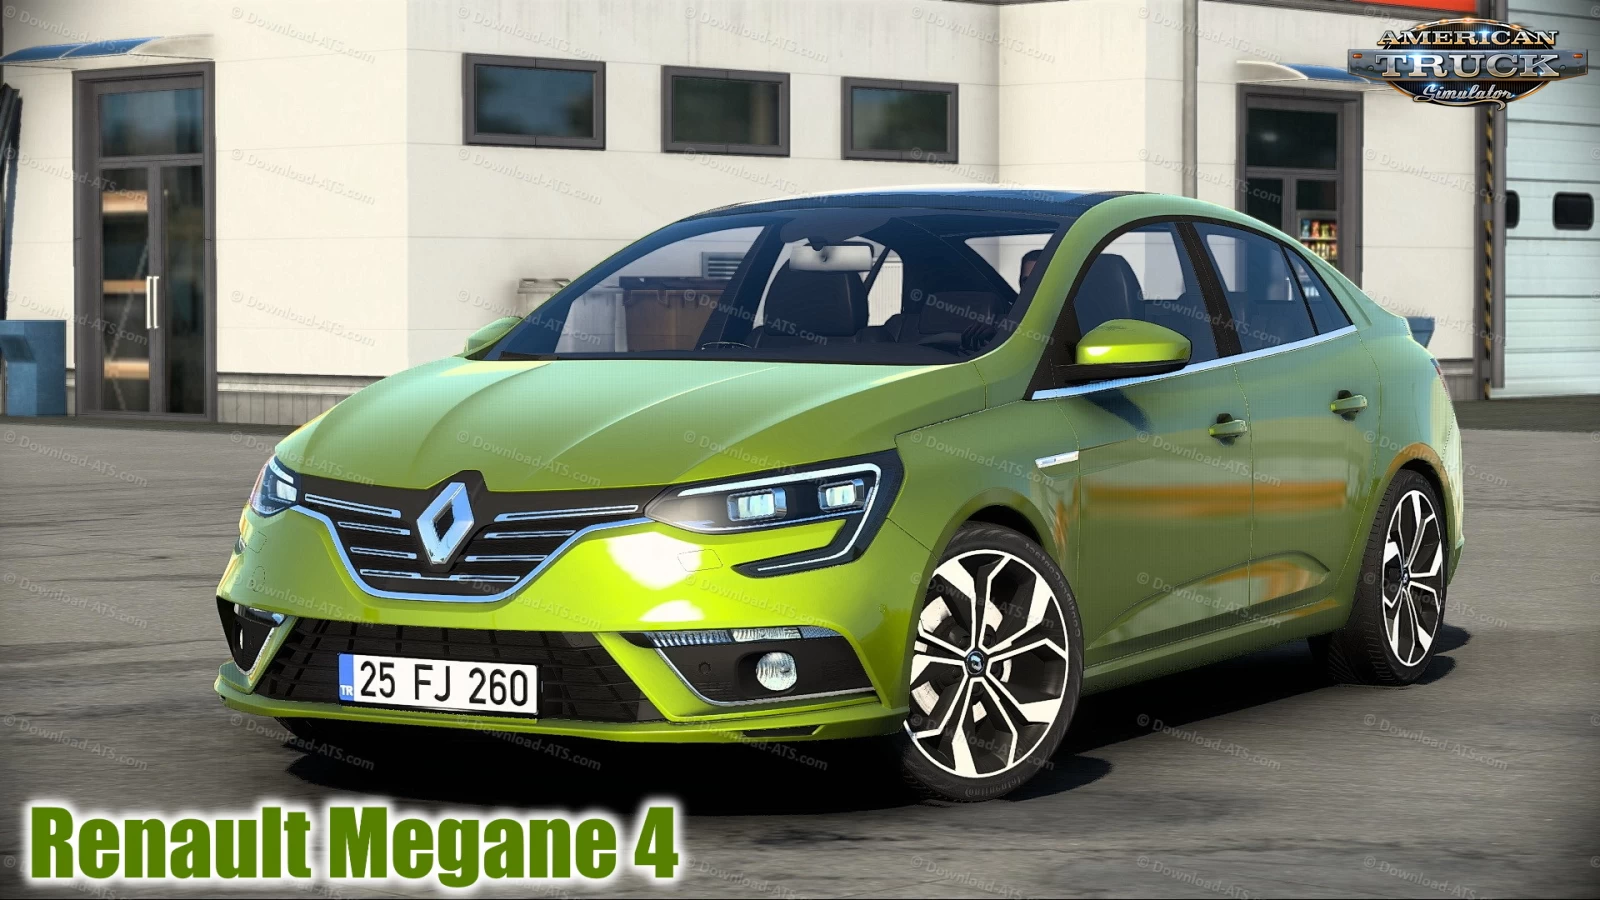 Renault Megane 4 + Interior v2.2 (1.46.x) for ATS